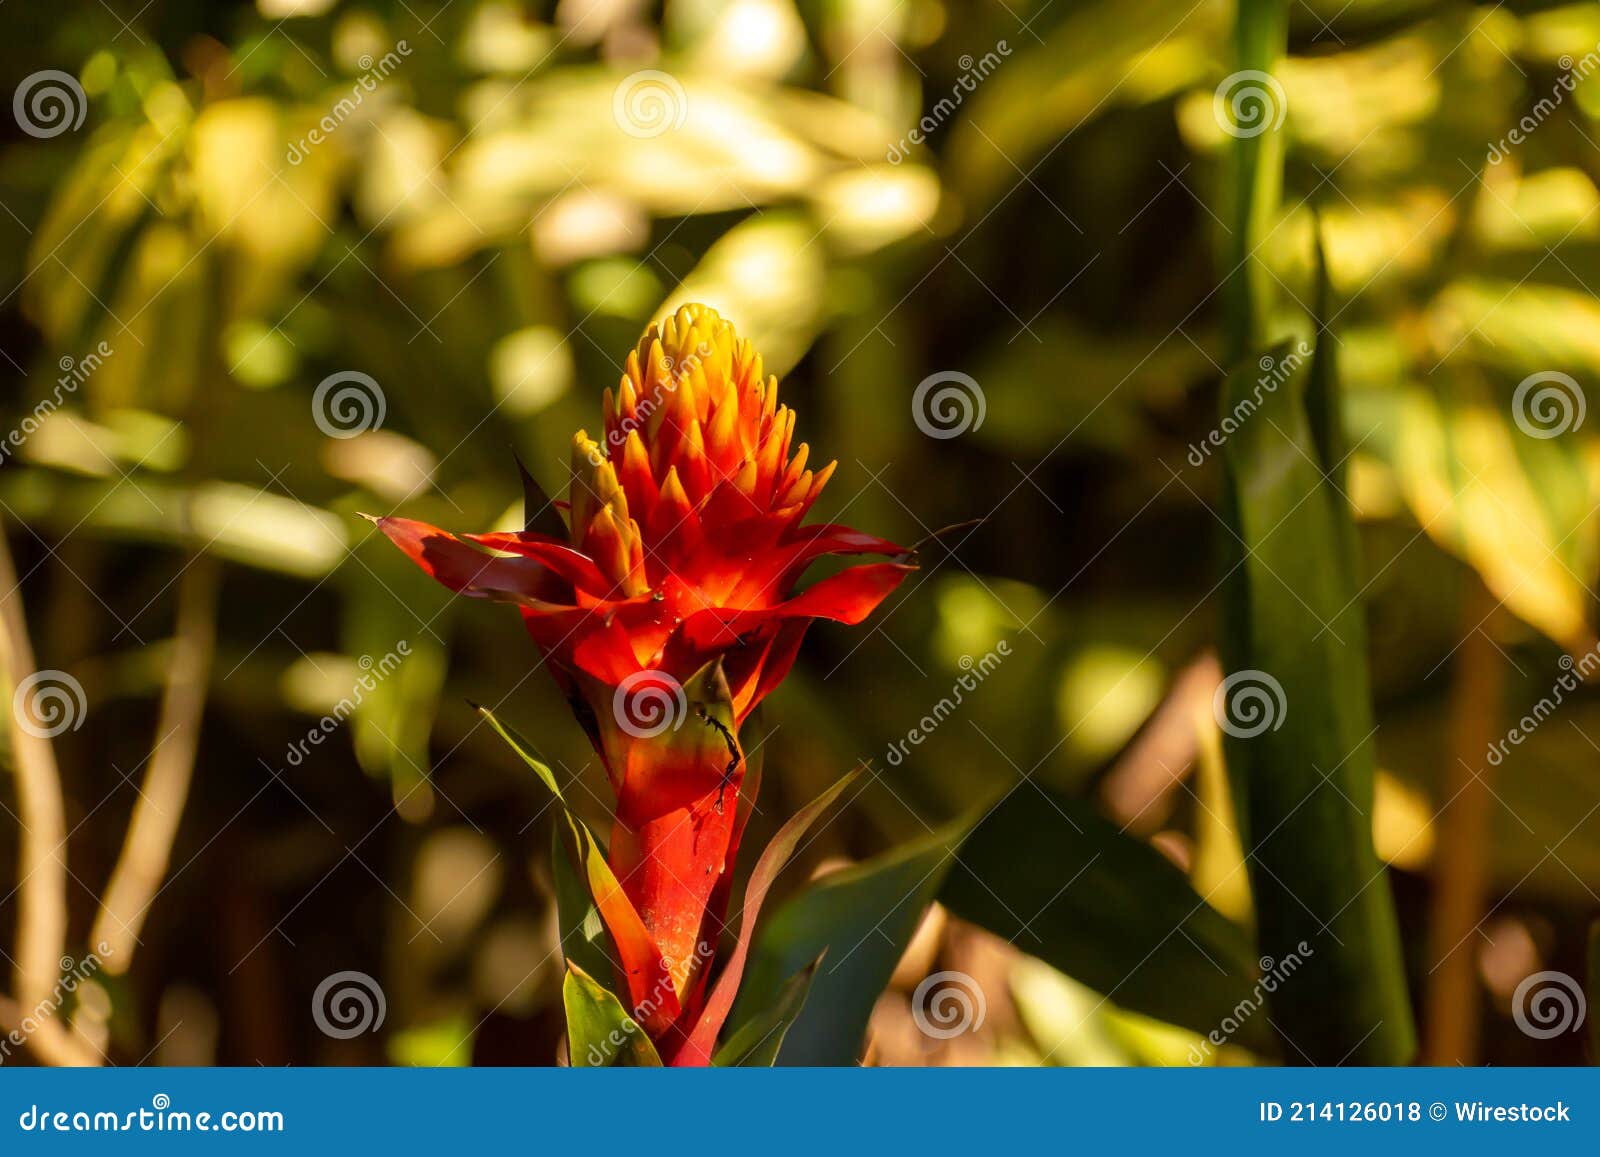 selective focus shot of beautiful guzmania conifera flower